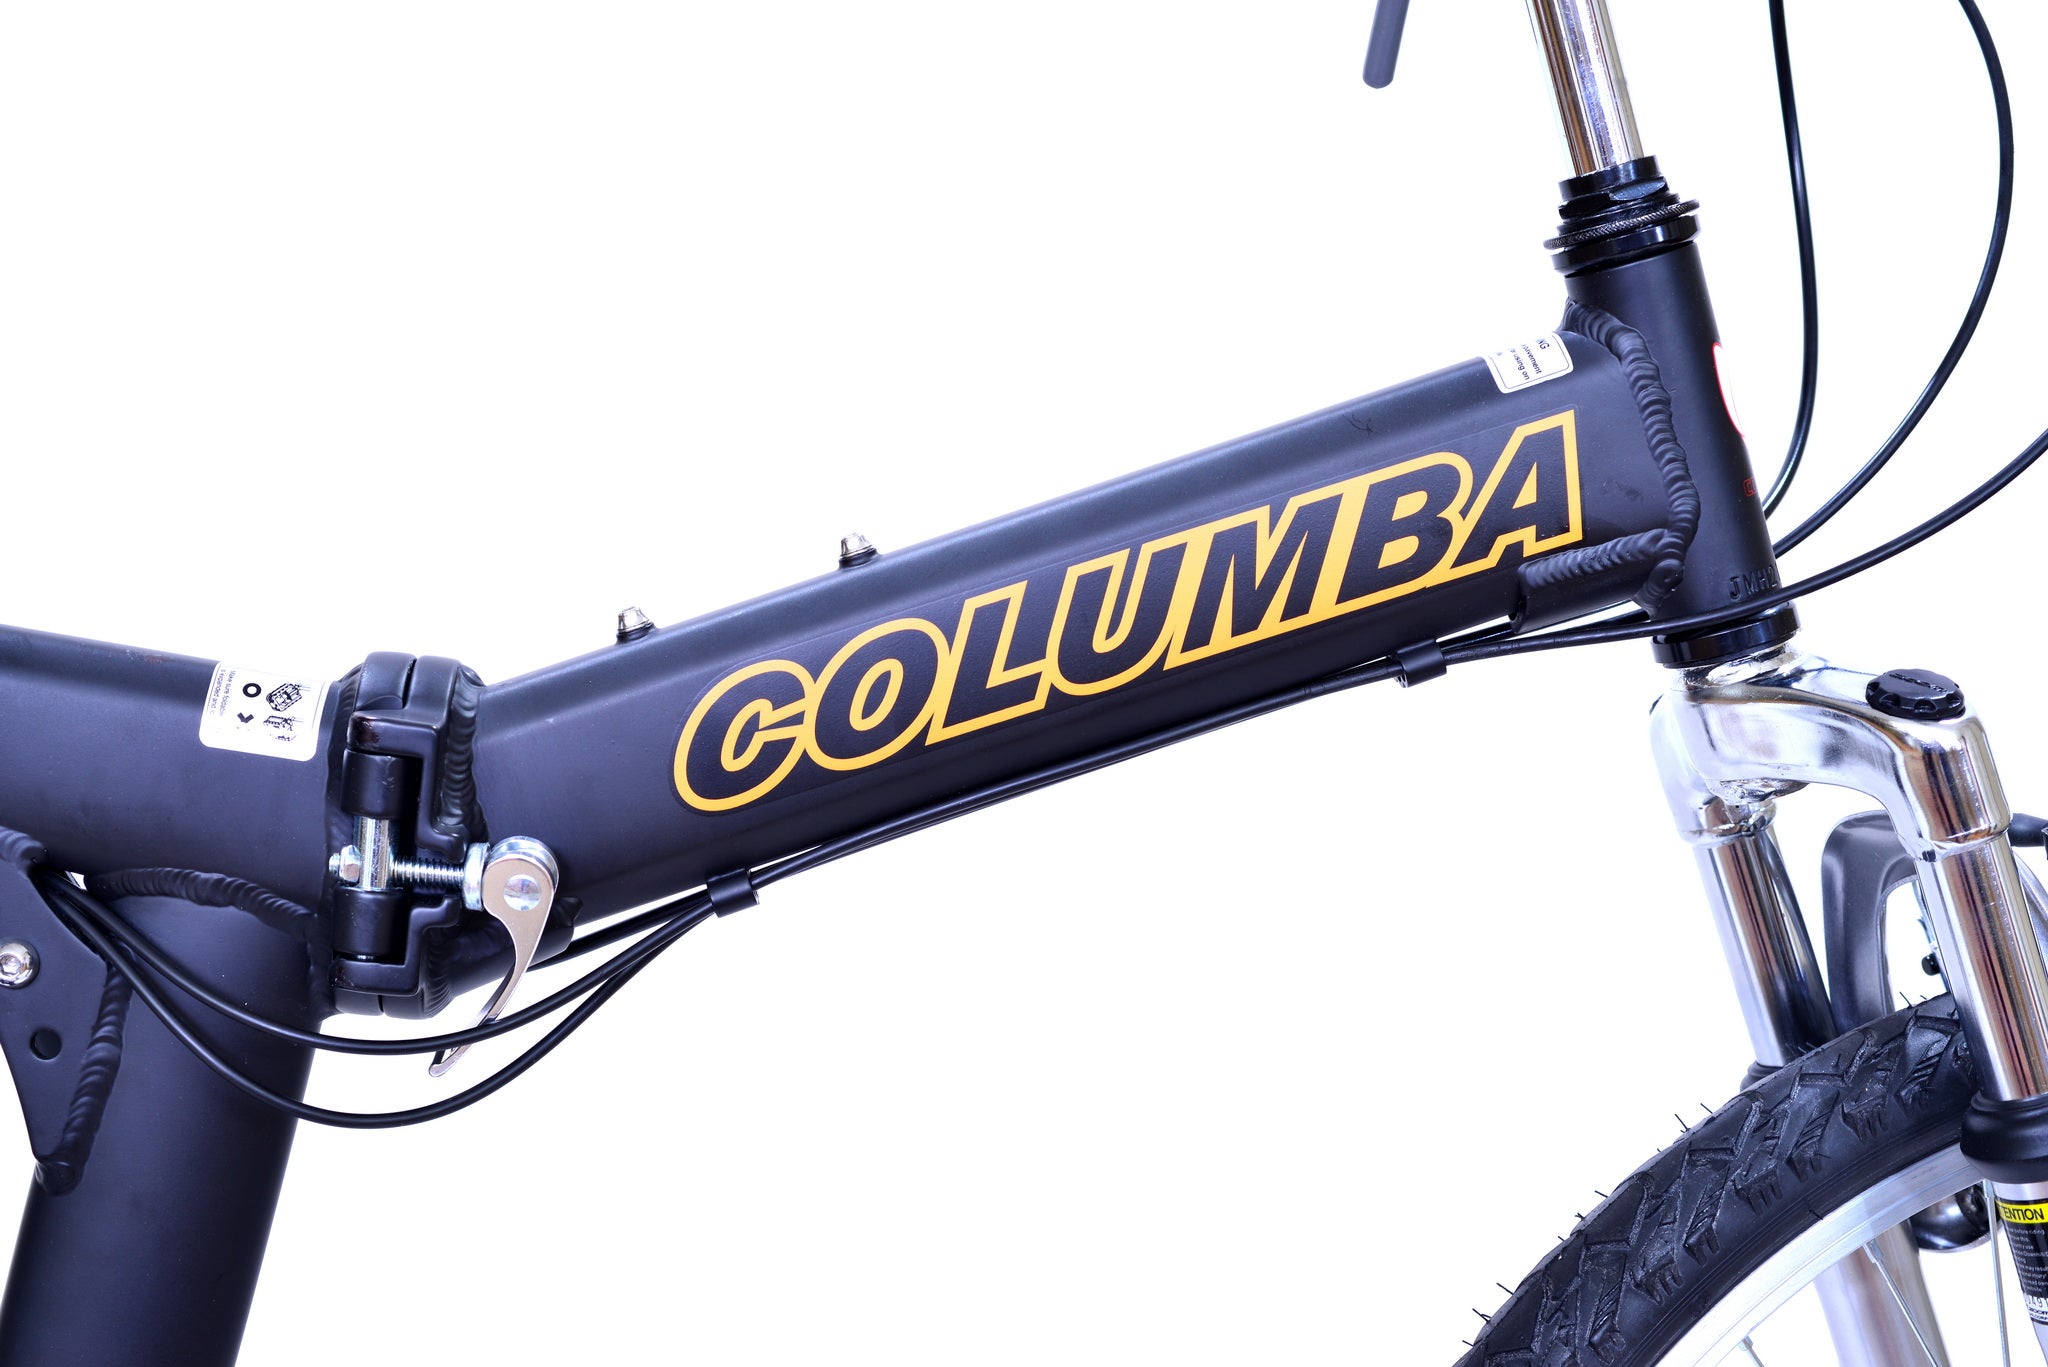 Bike tube that has a black and orange logo that reads "Columba."